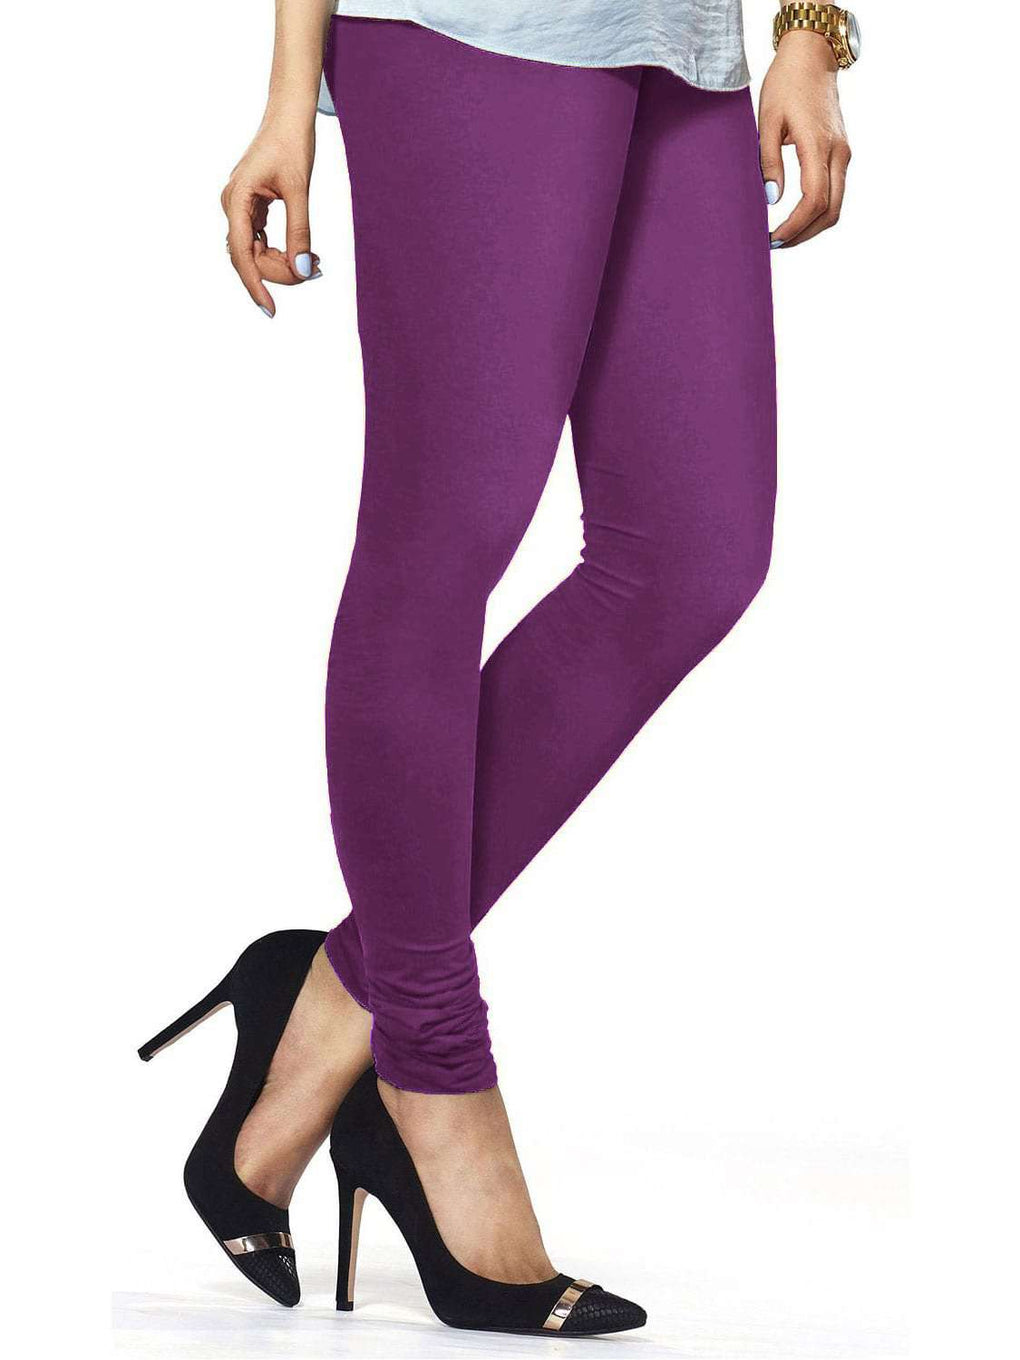 Buy Cotton Lycra Churidar Free Size Dark Violet Leggings Online